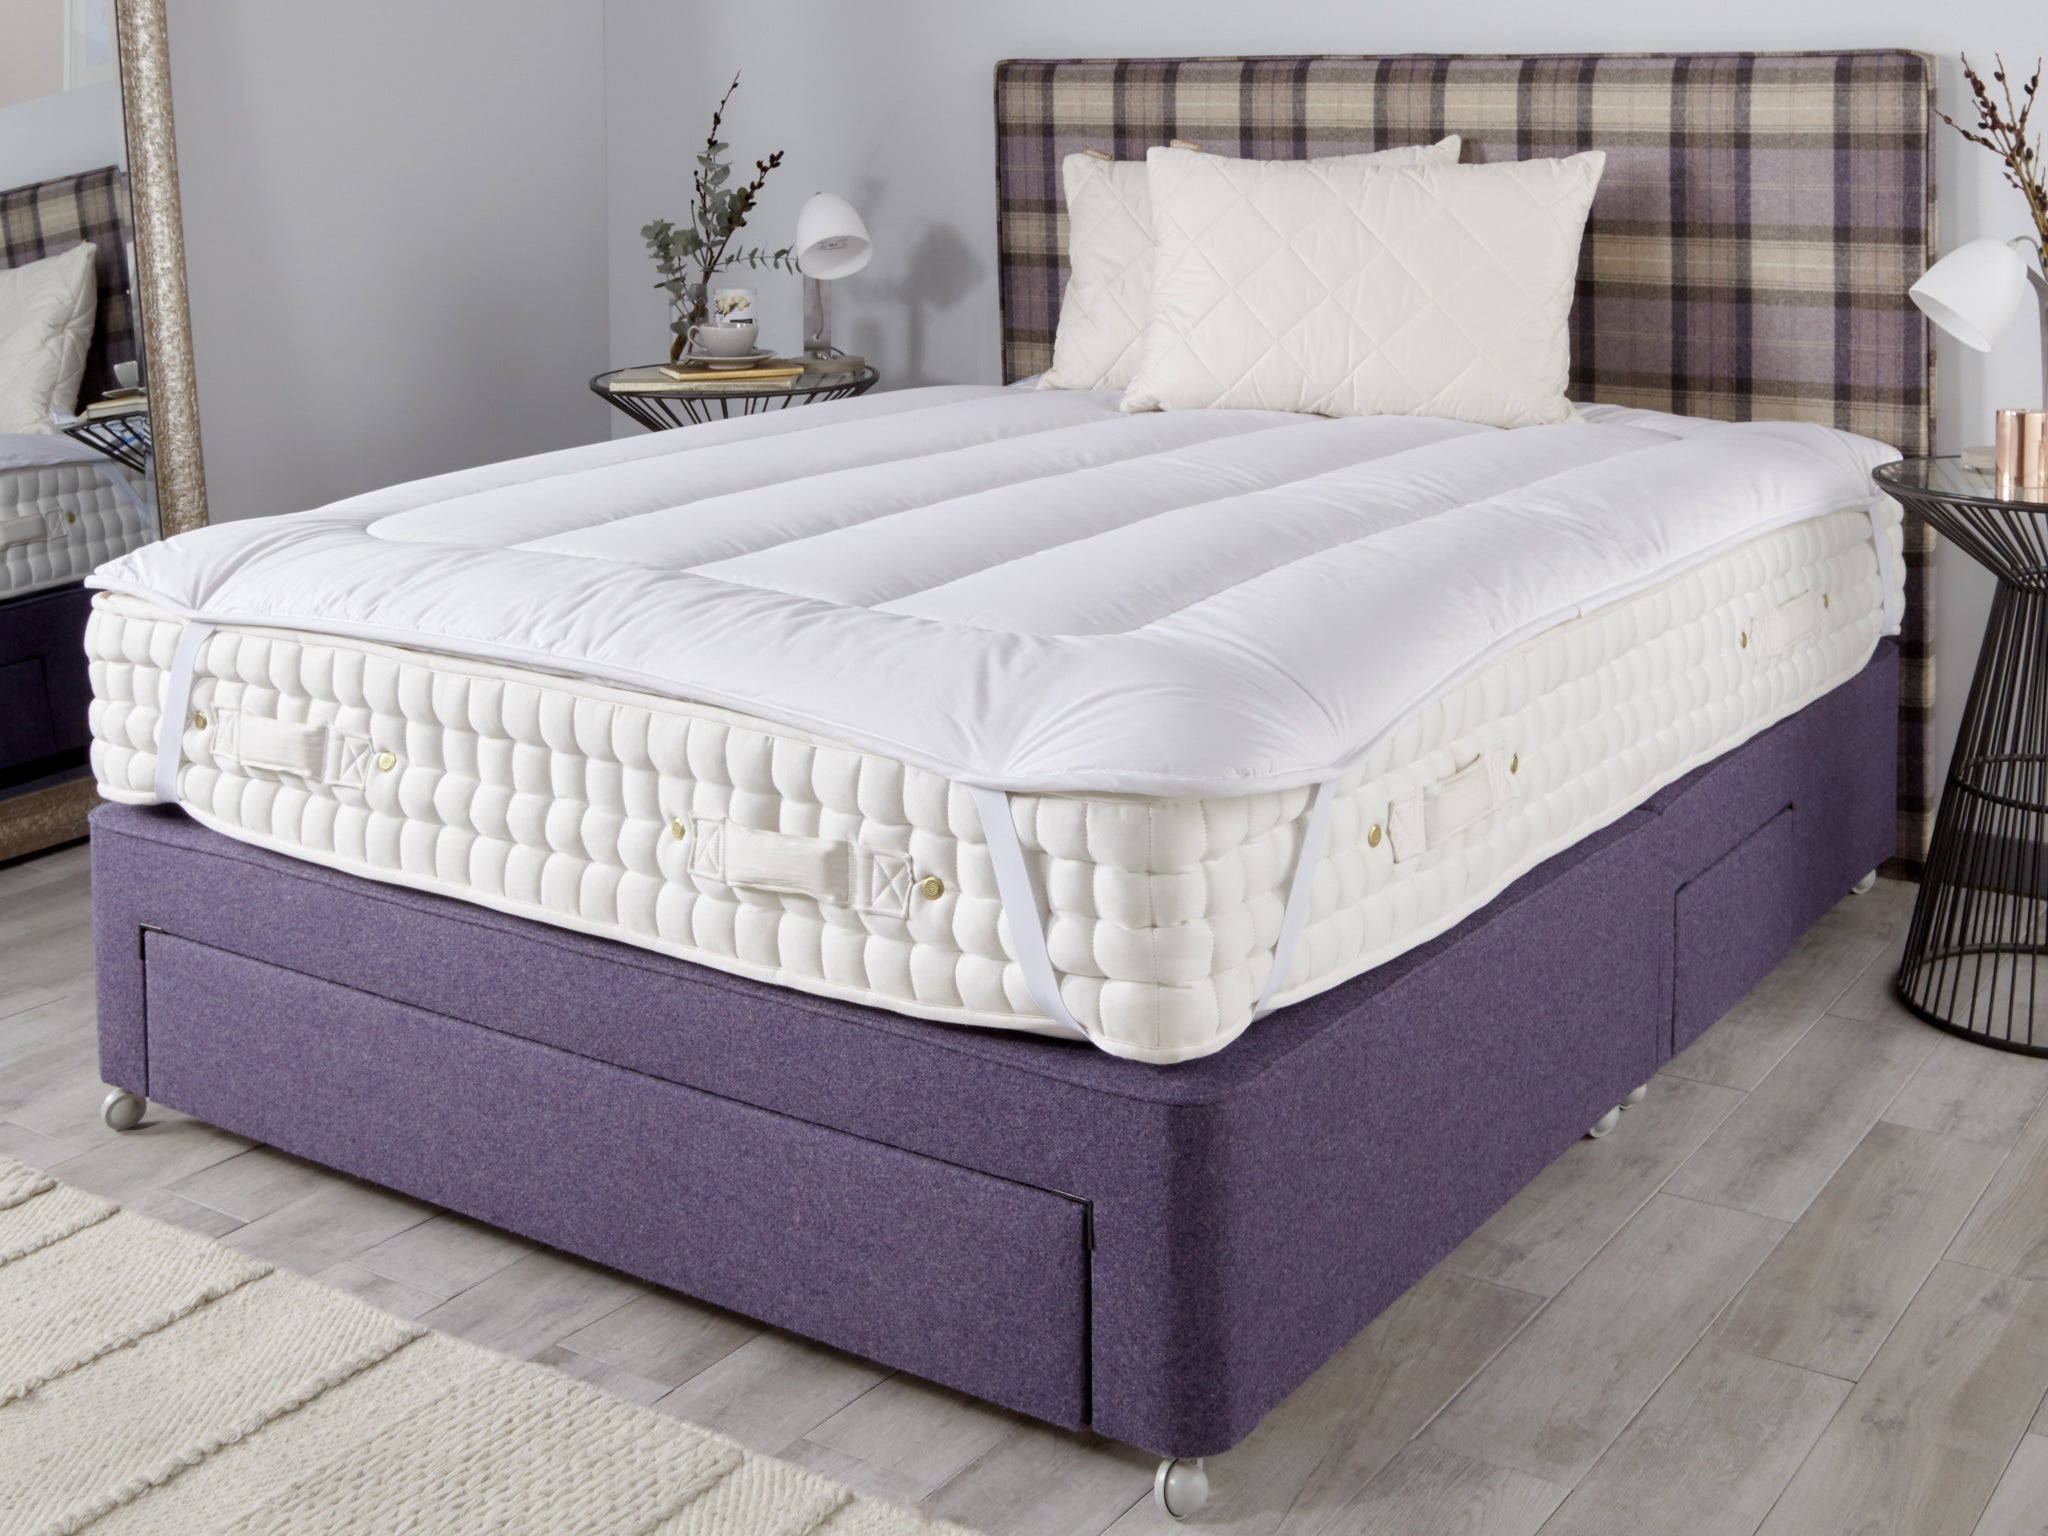 mattress topper for girls twin bed